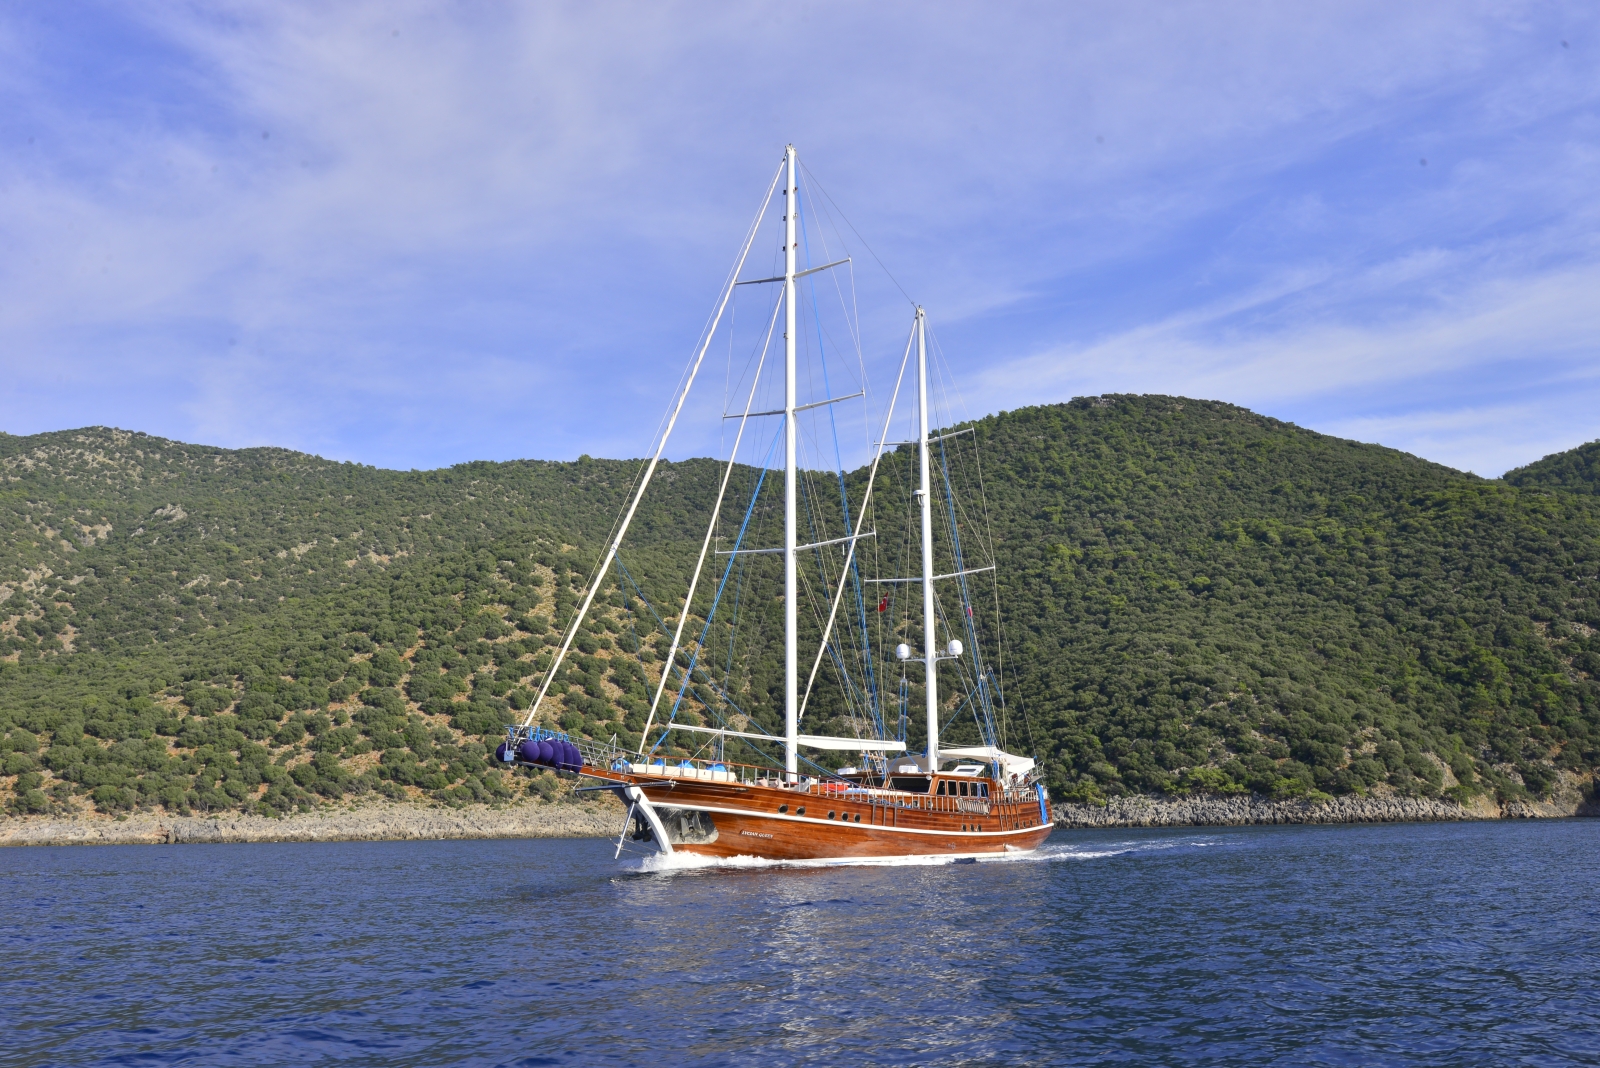 Lycian Queen out on water in Turkey